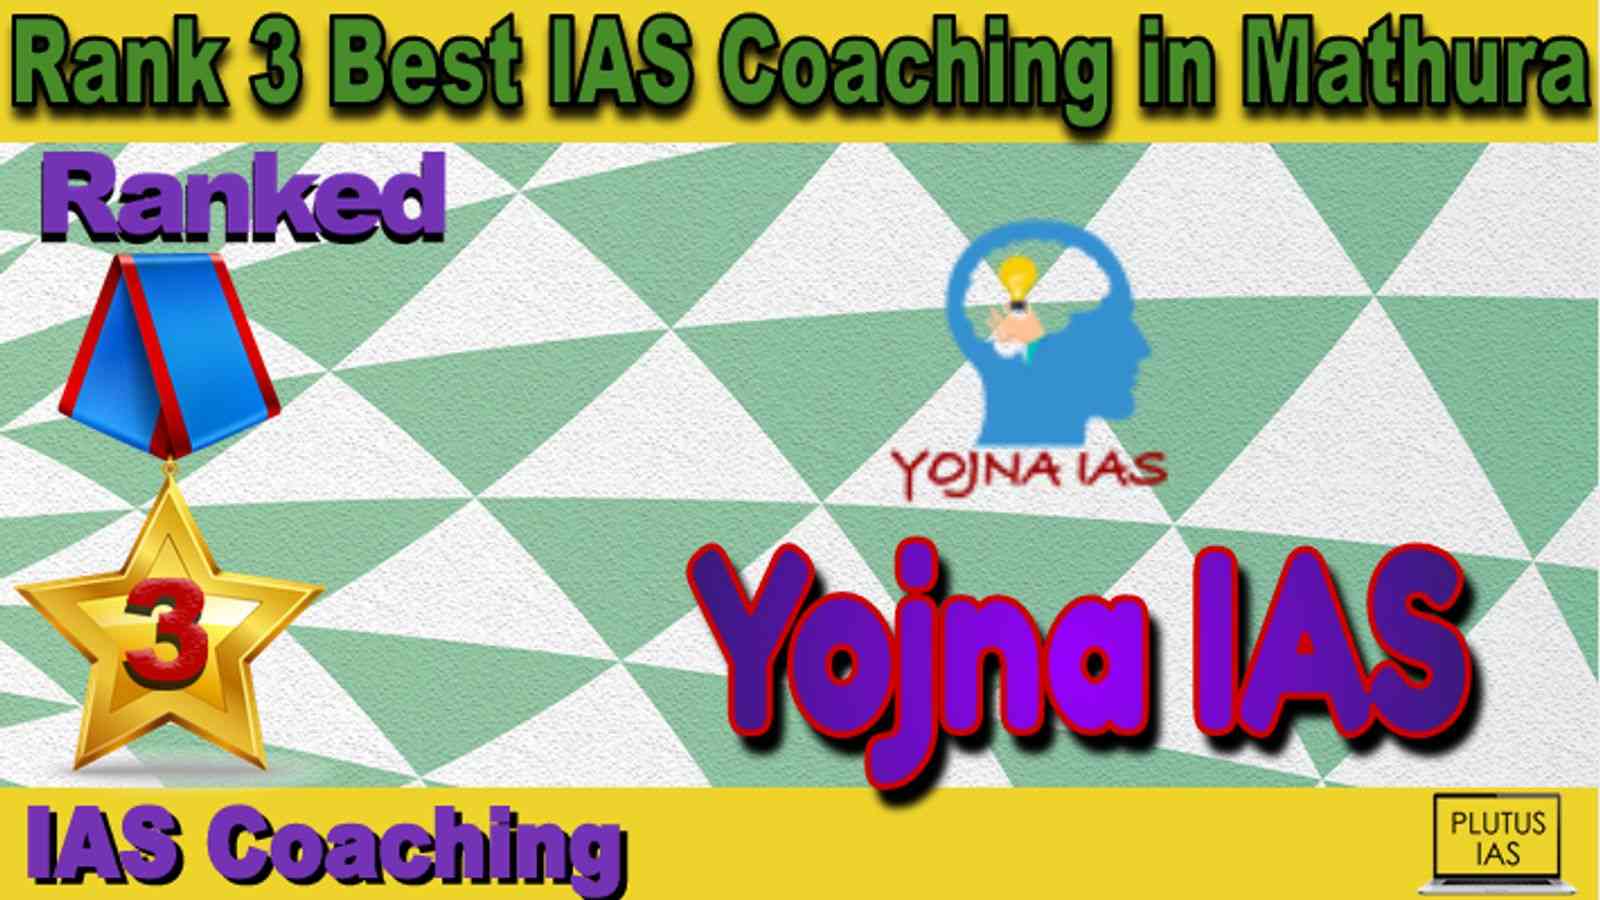 Rank 3 Best IAS Coaching in Mathura